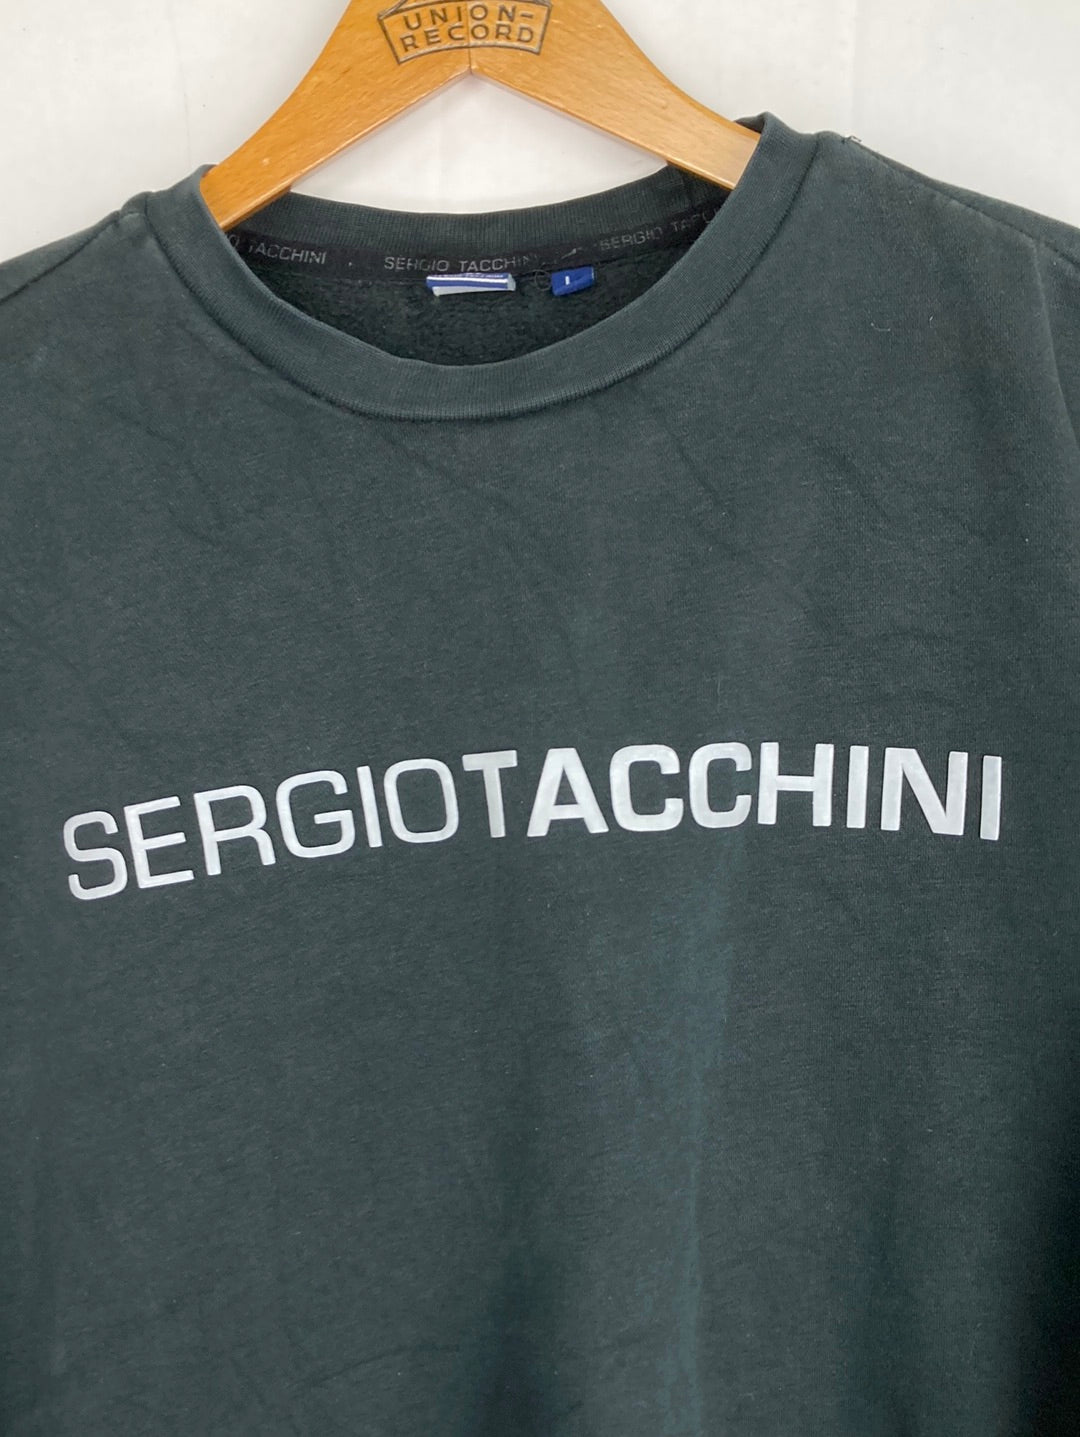 Sergio Tacchini Sweater (M)